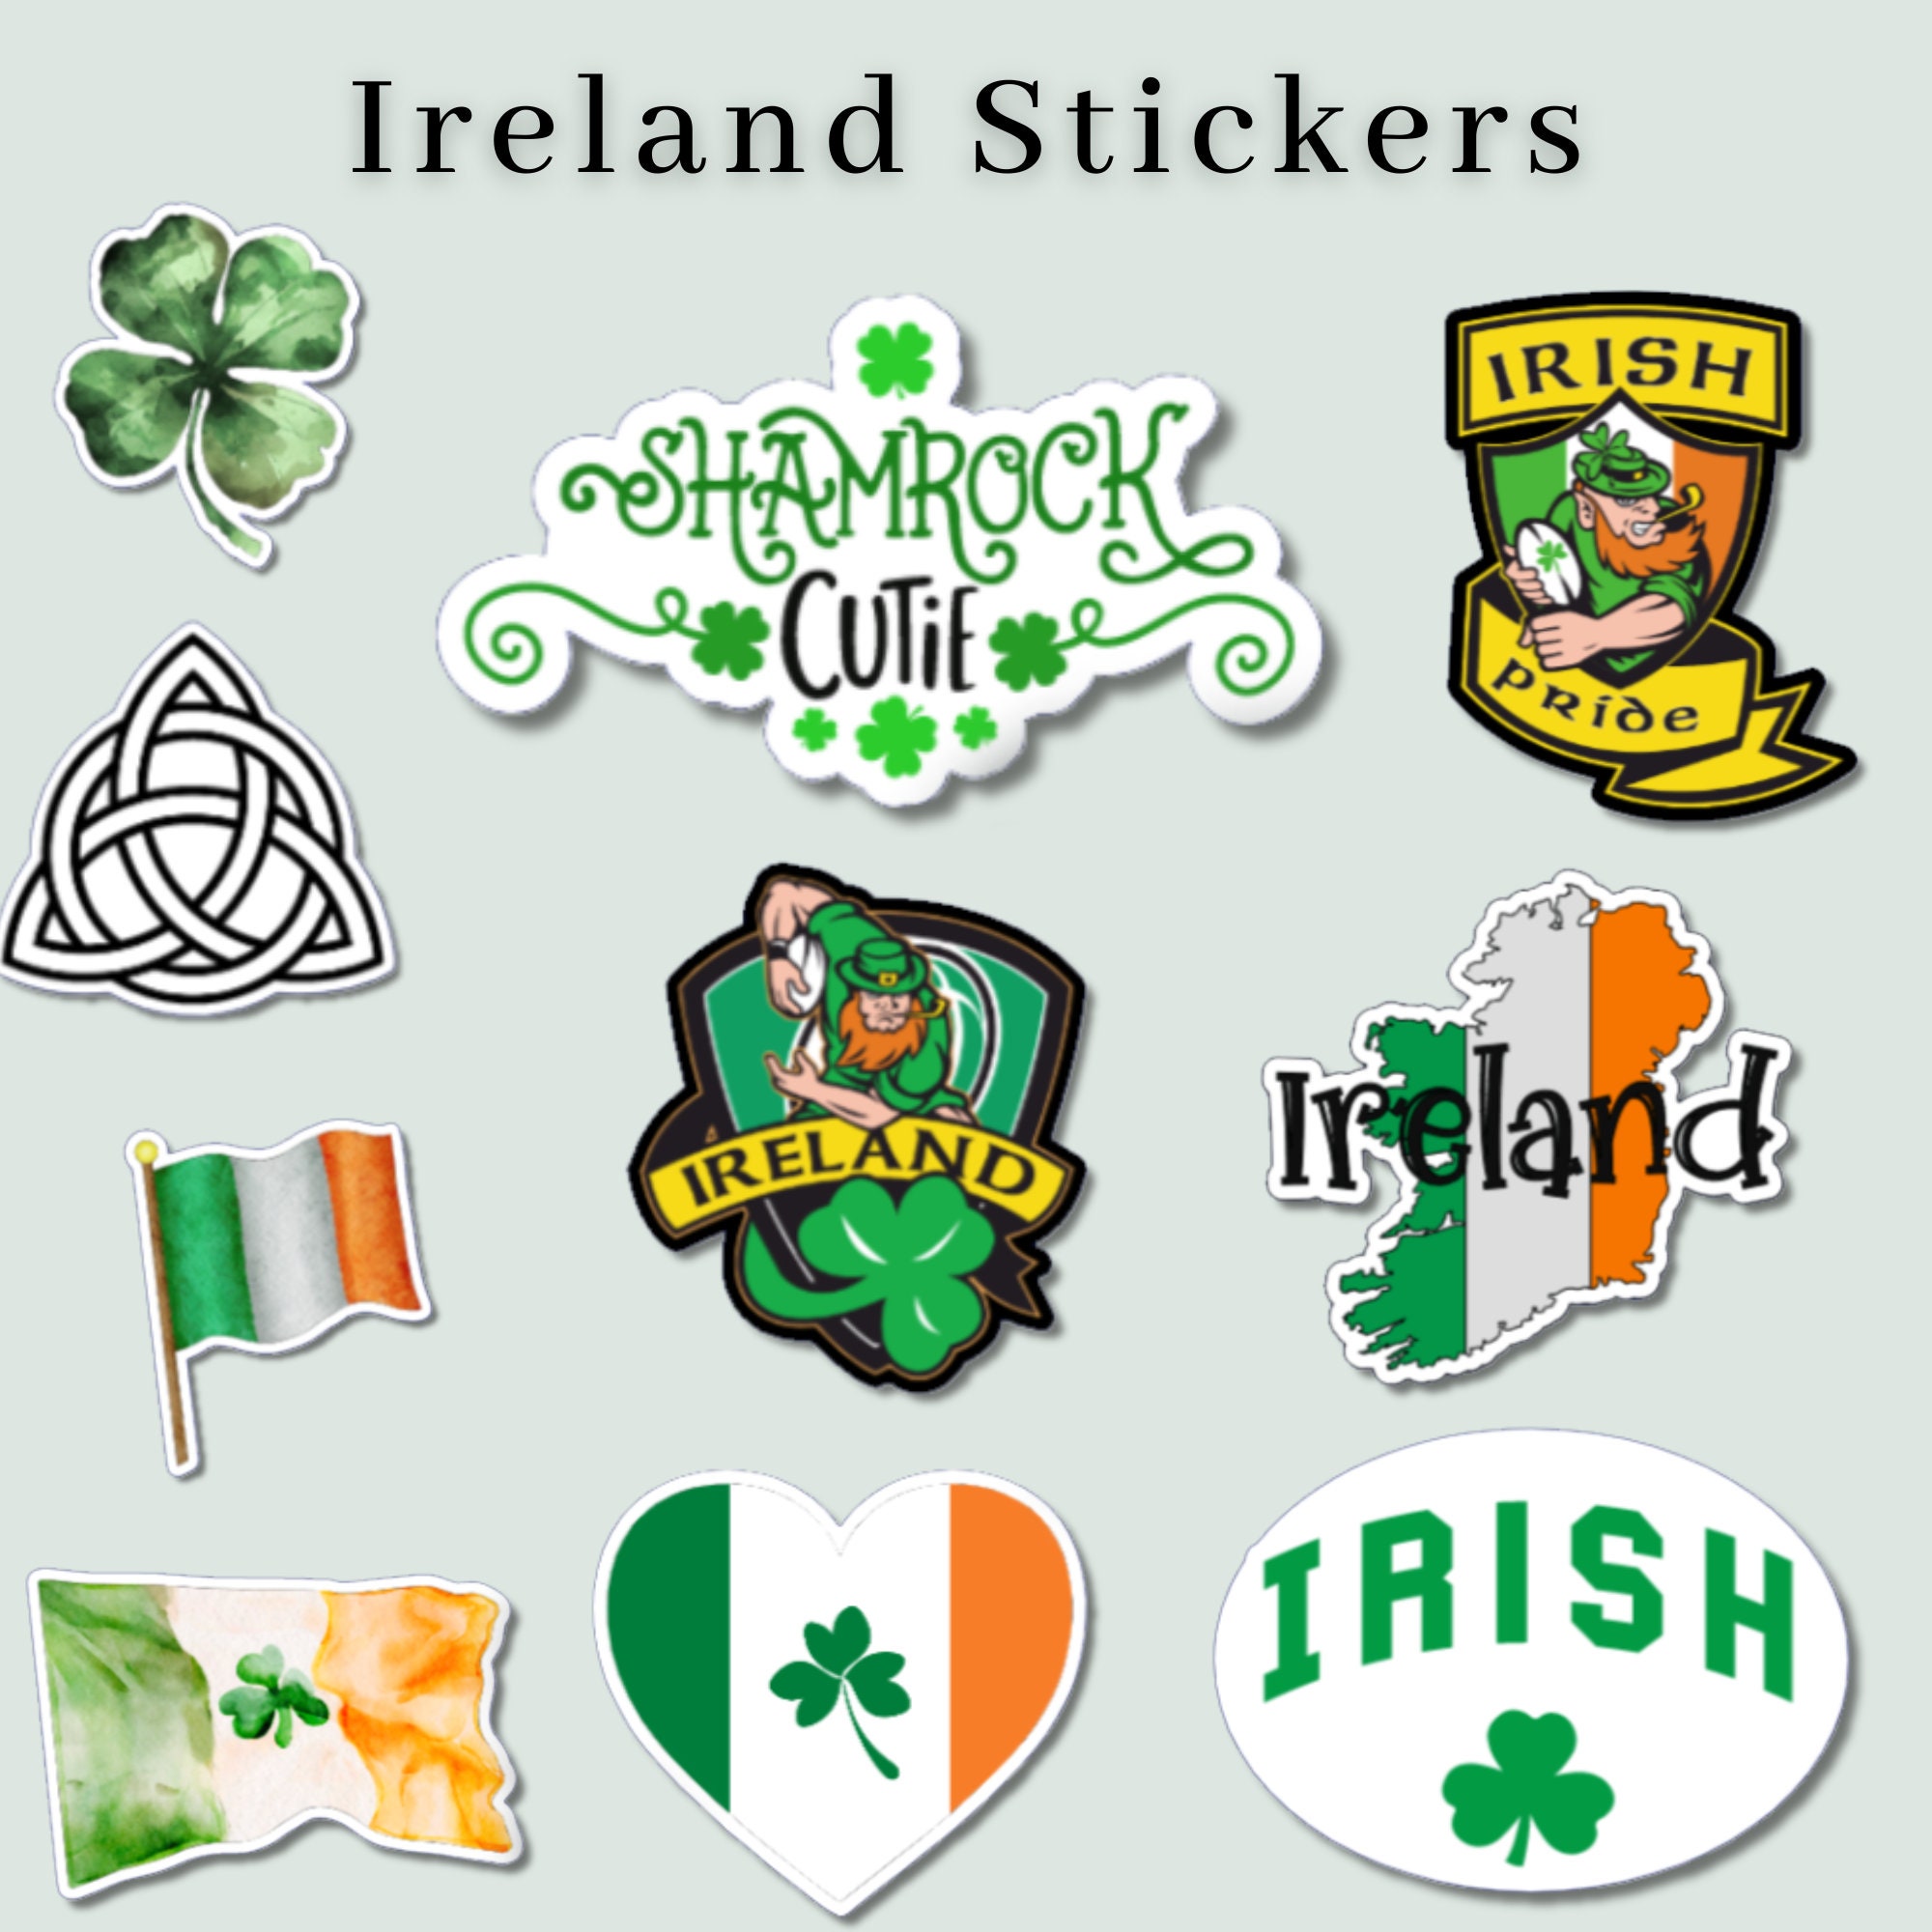 It'll Be Grand, Irish Expression Print, Irish Phrase, Funny Irish Print, Irish  Decor, Irish Wall Art, Ireland Print, Gift From Ireland 